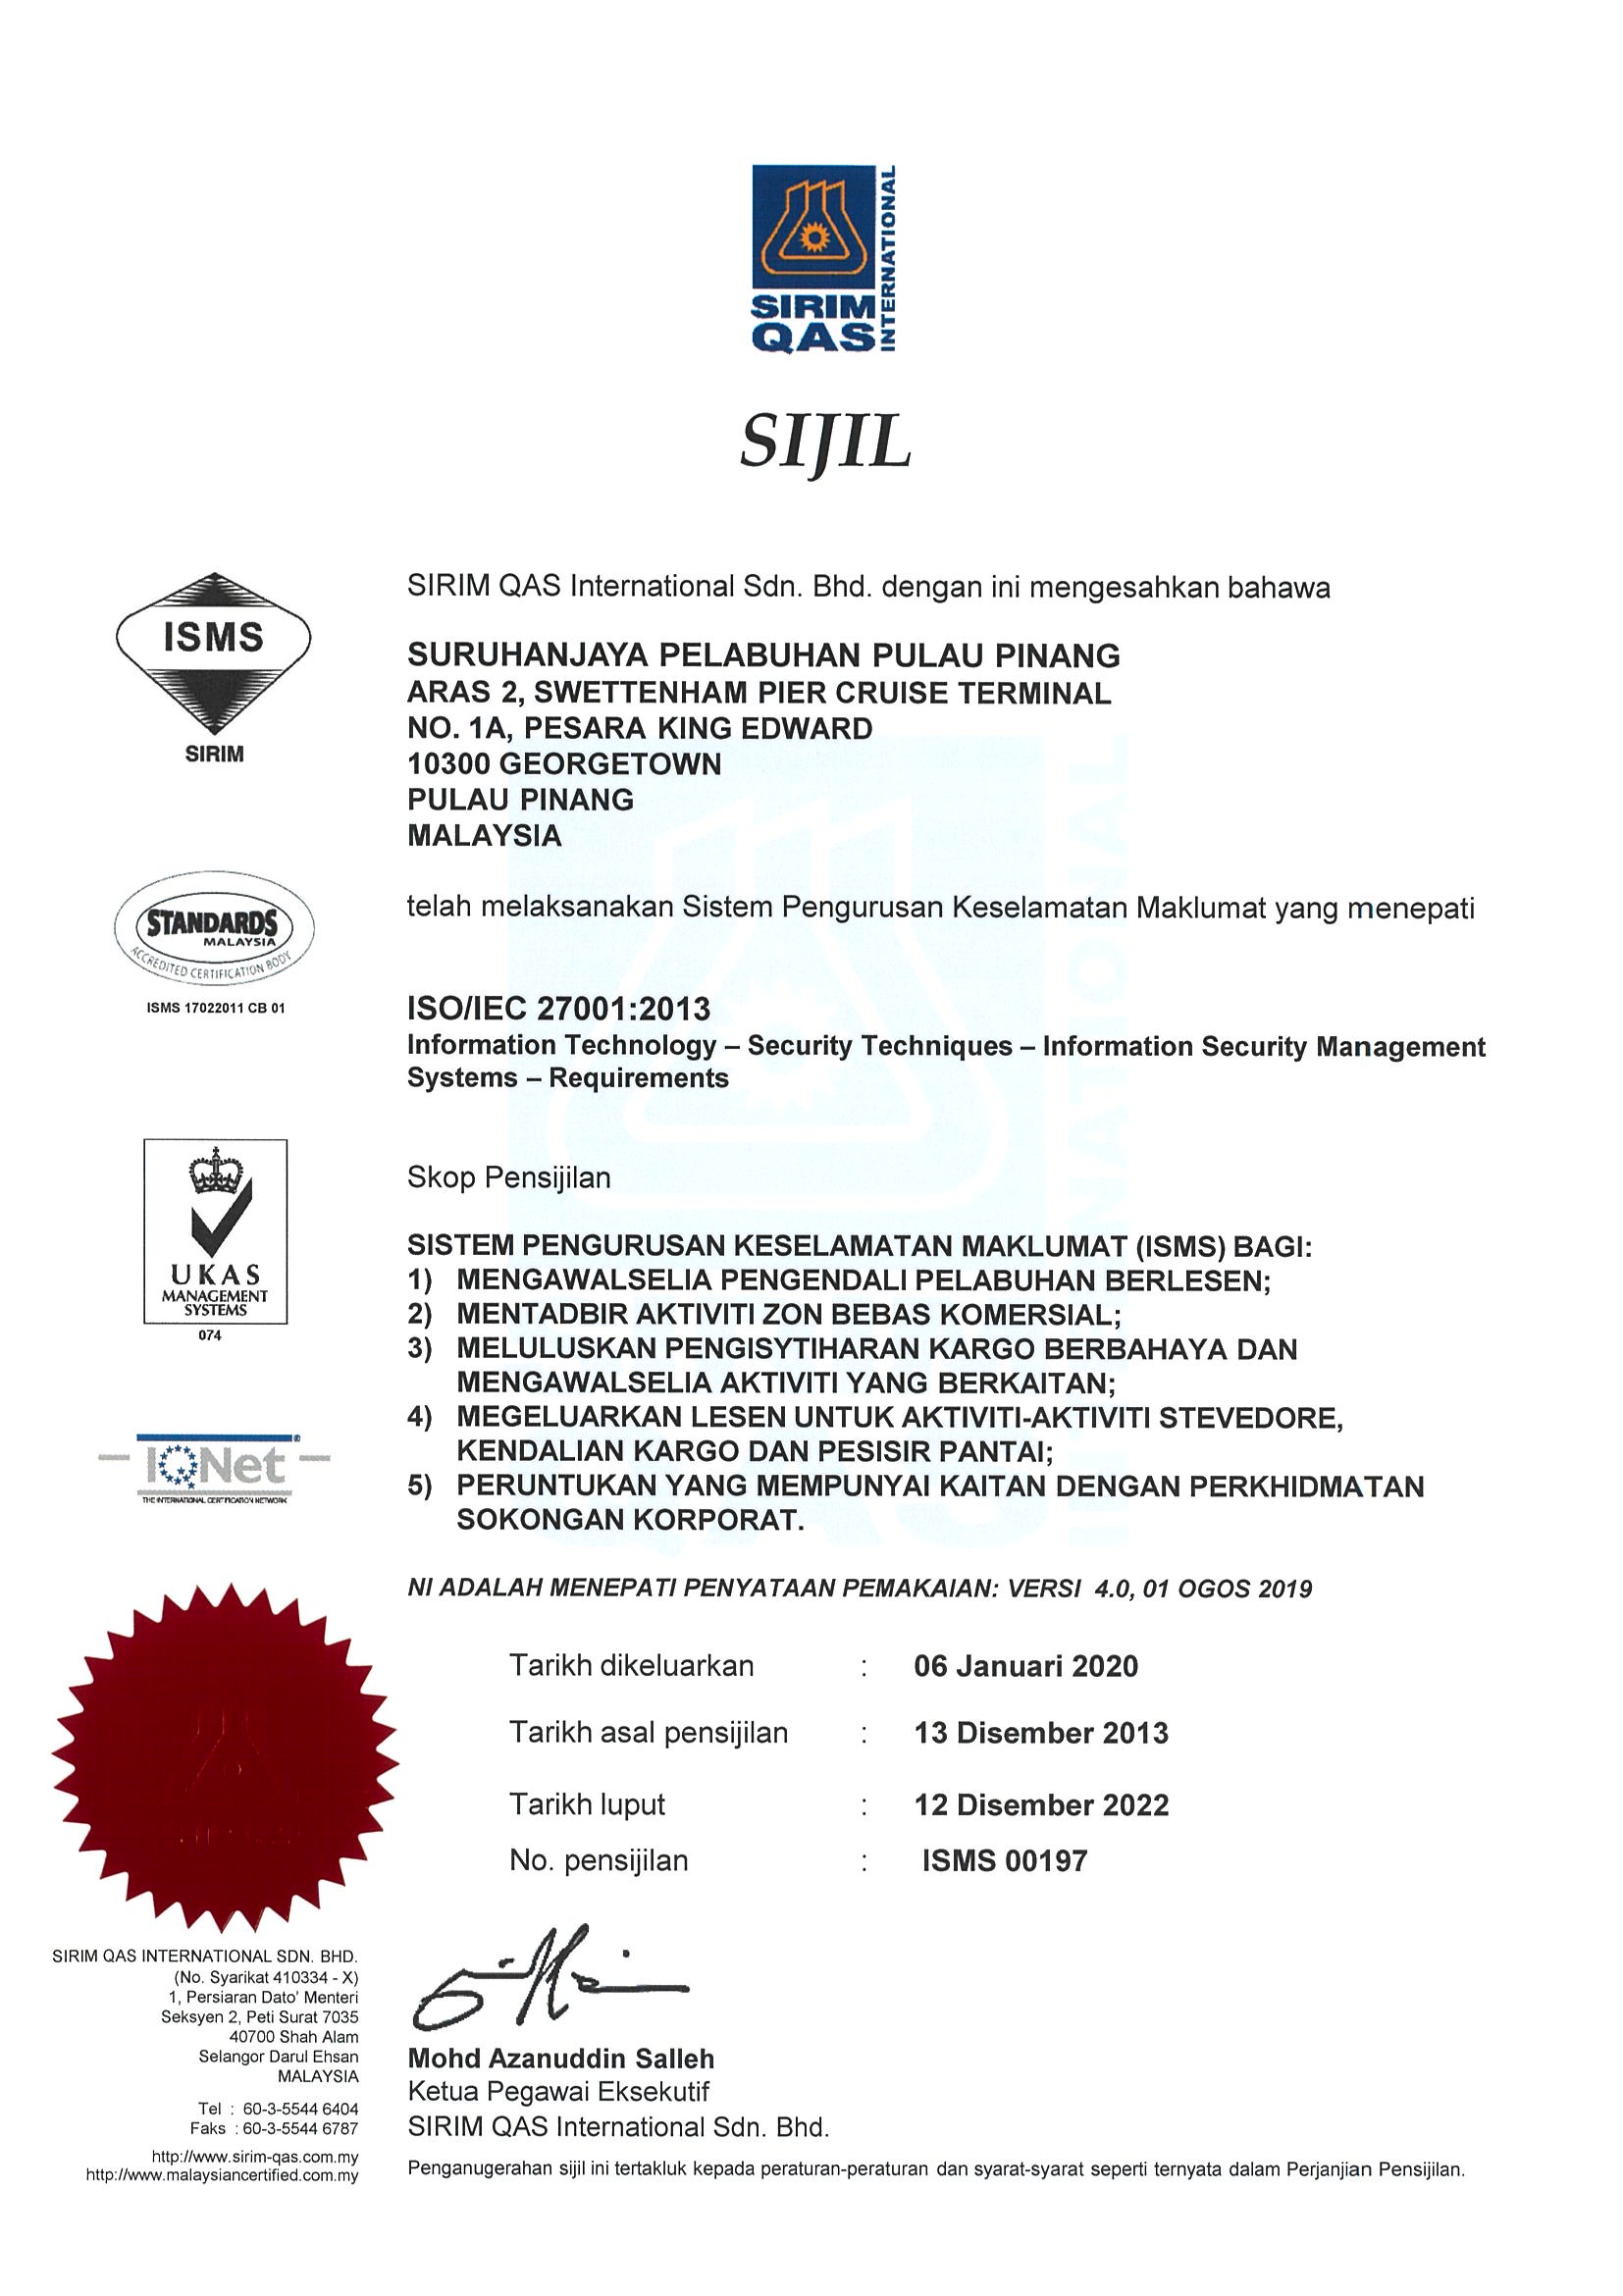 SIJIL ISMS SPCT 2020 TILL 2022 1